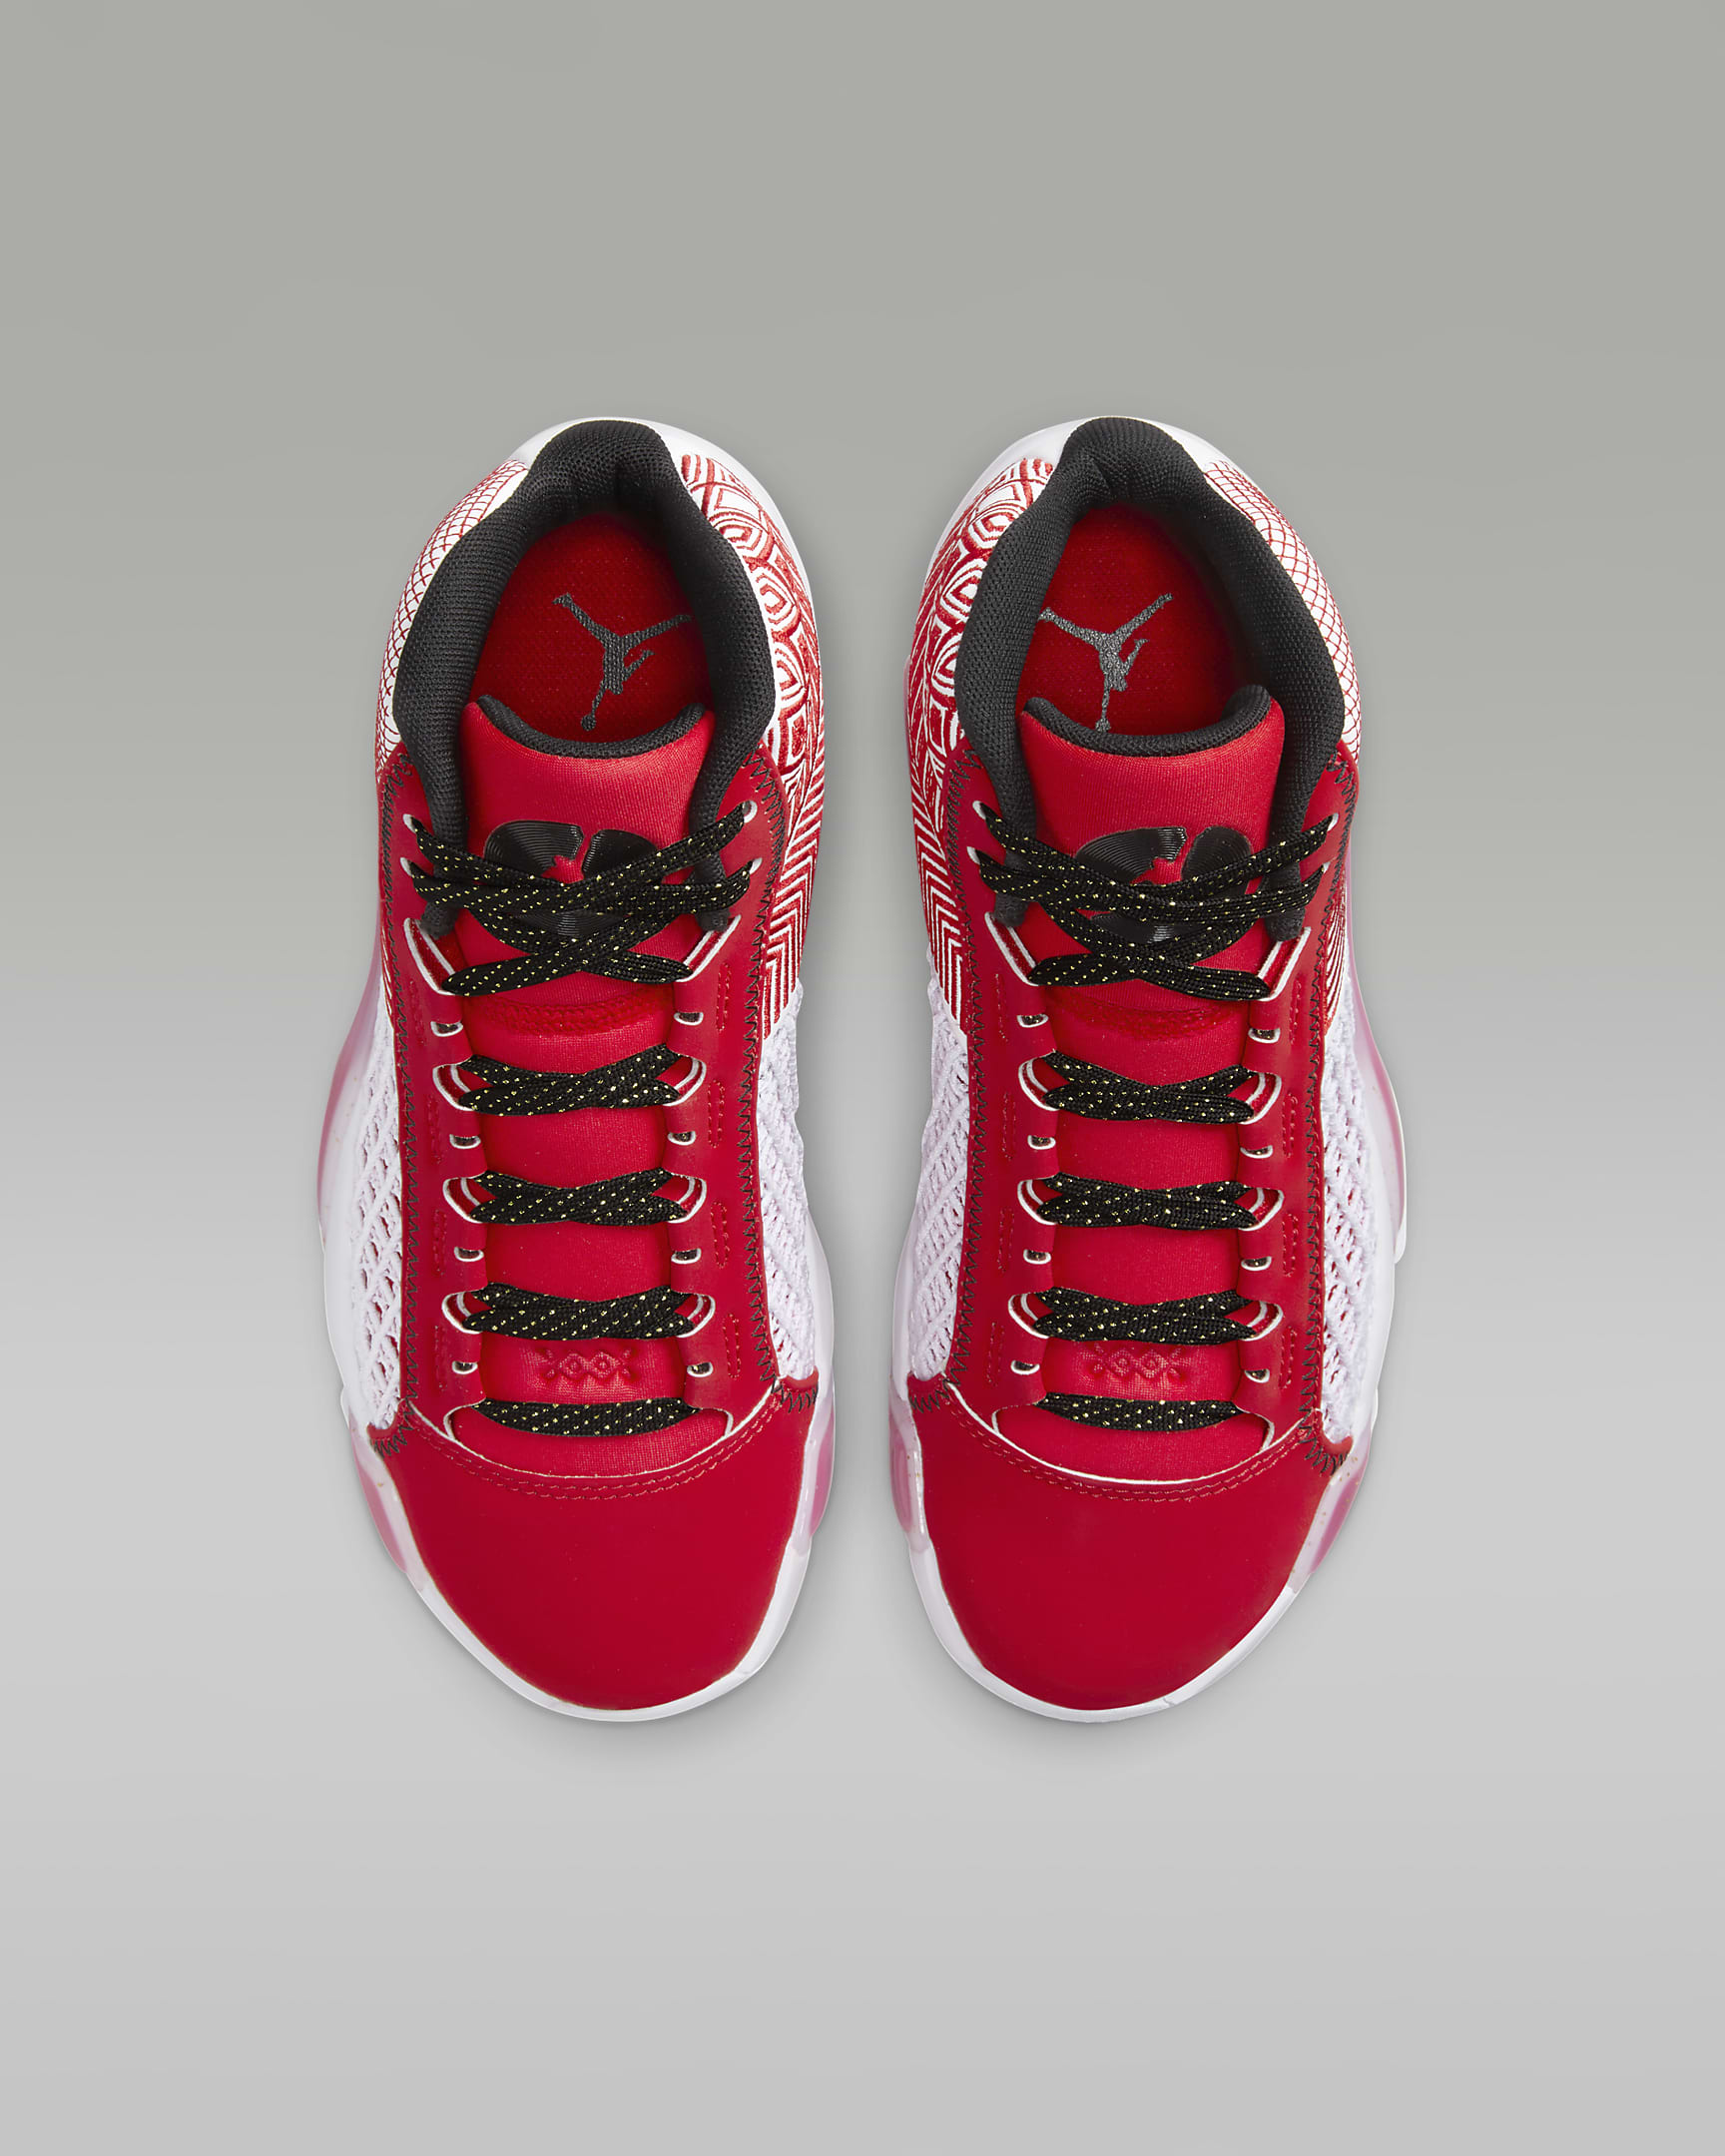 Calzado para niños grandes Air Jordan XXXVIII. Nike.com